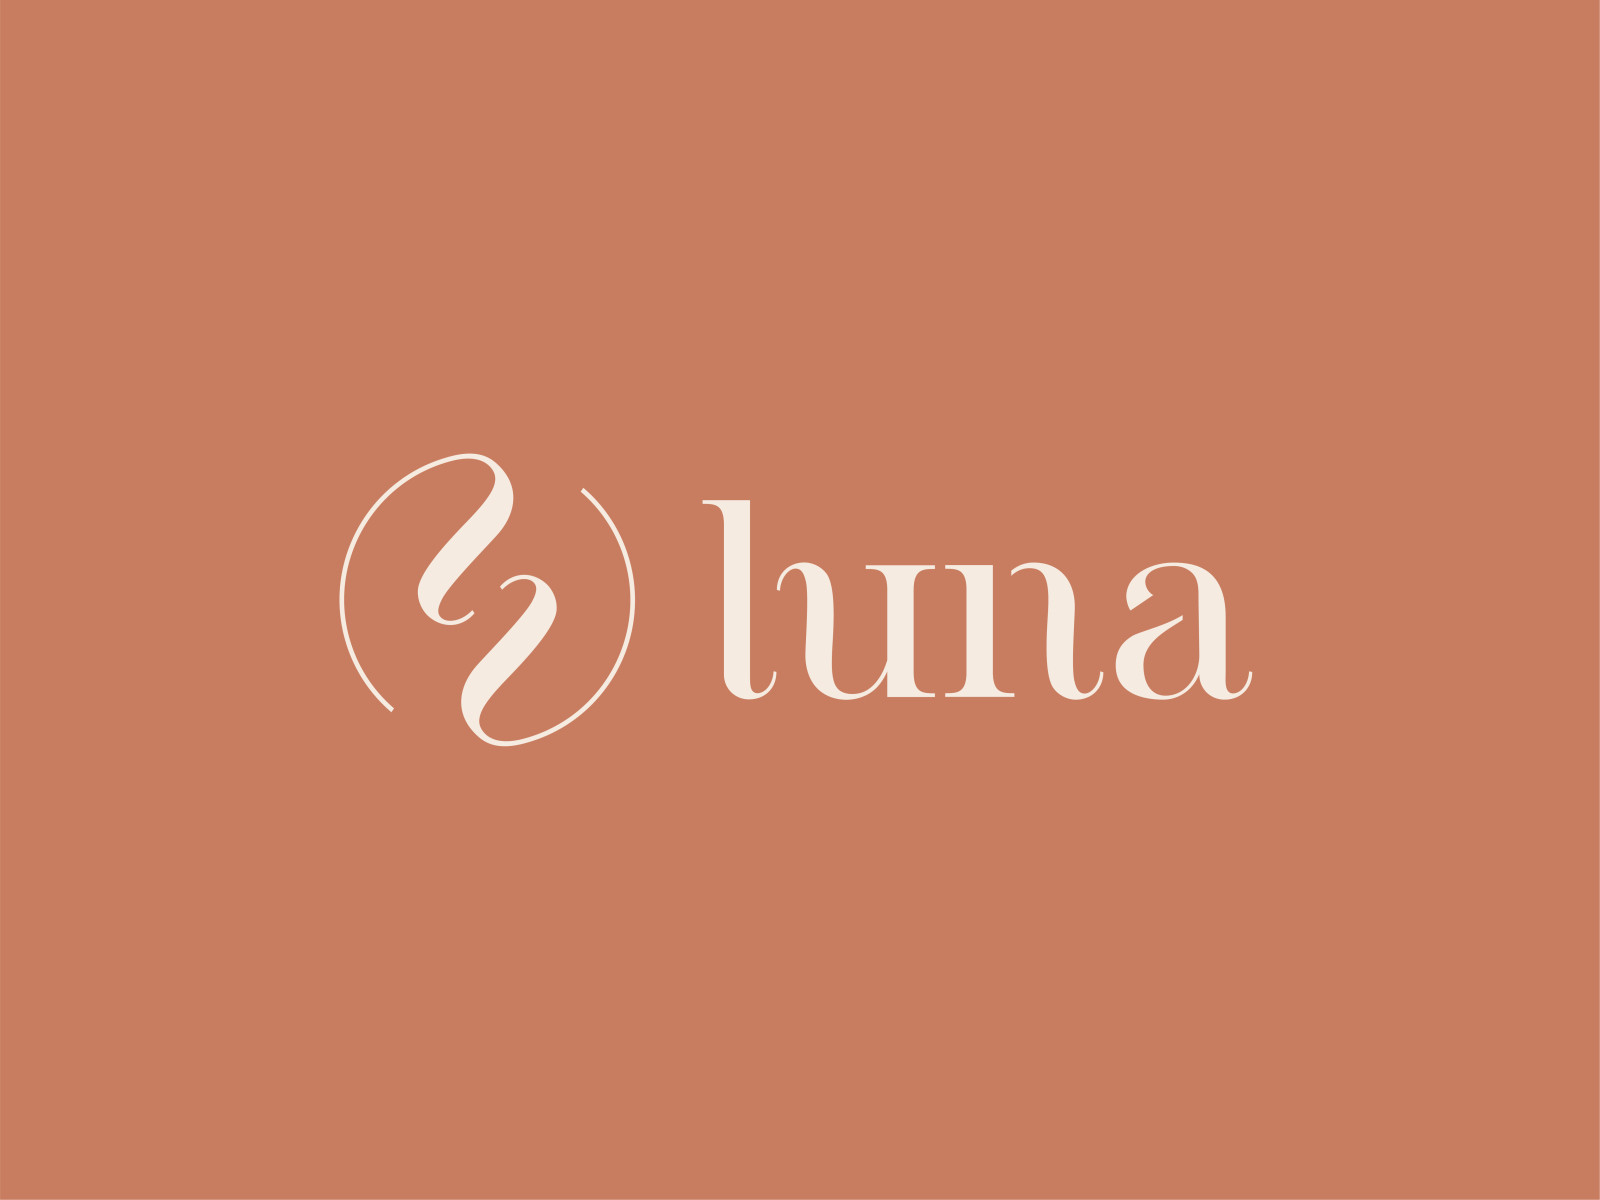 Luna Hair & Beauty Logo by Over&Over Design Studio on Dribbble